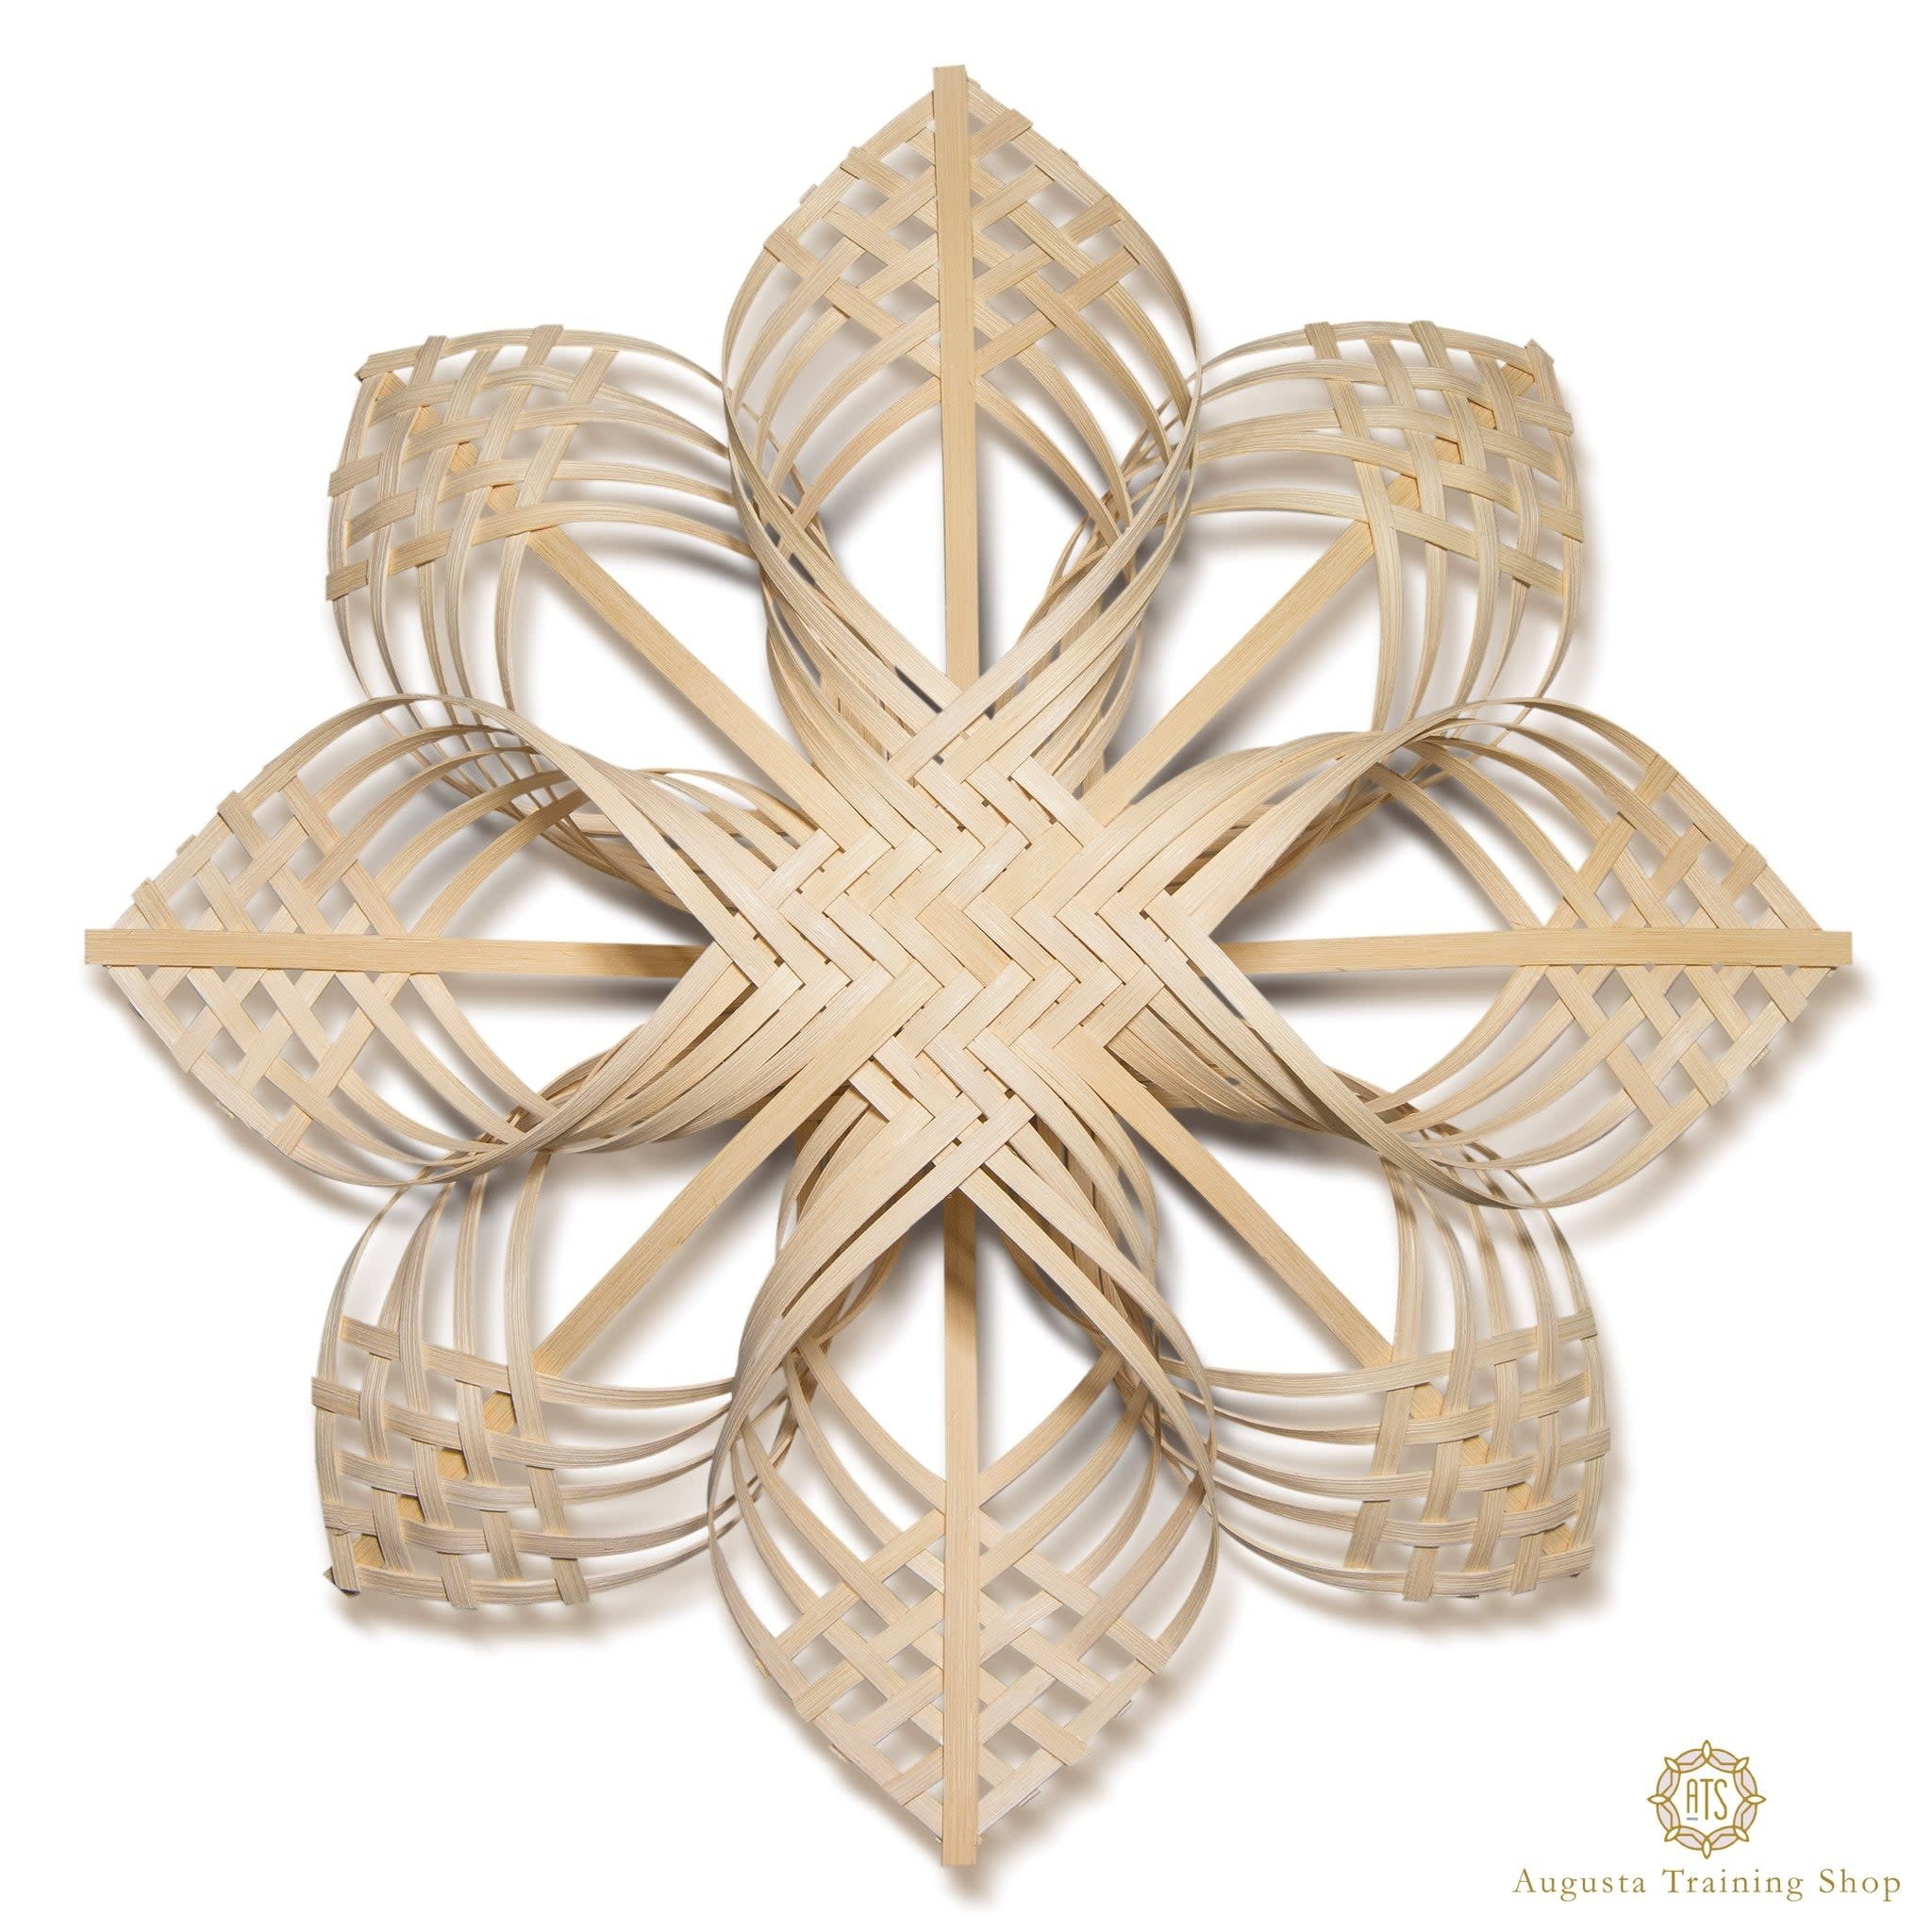 Large snowflake decorations for Christmas, 雪花聖誕飾品, Handmade